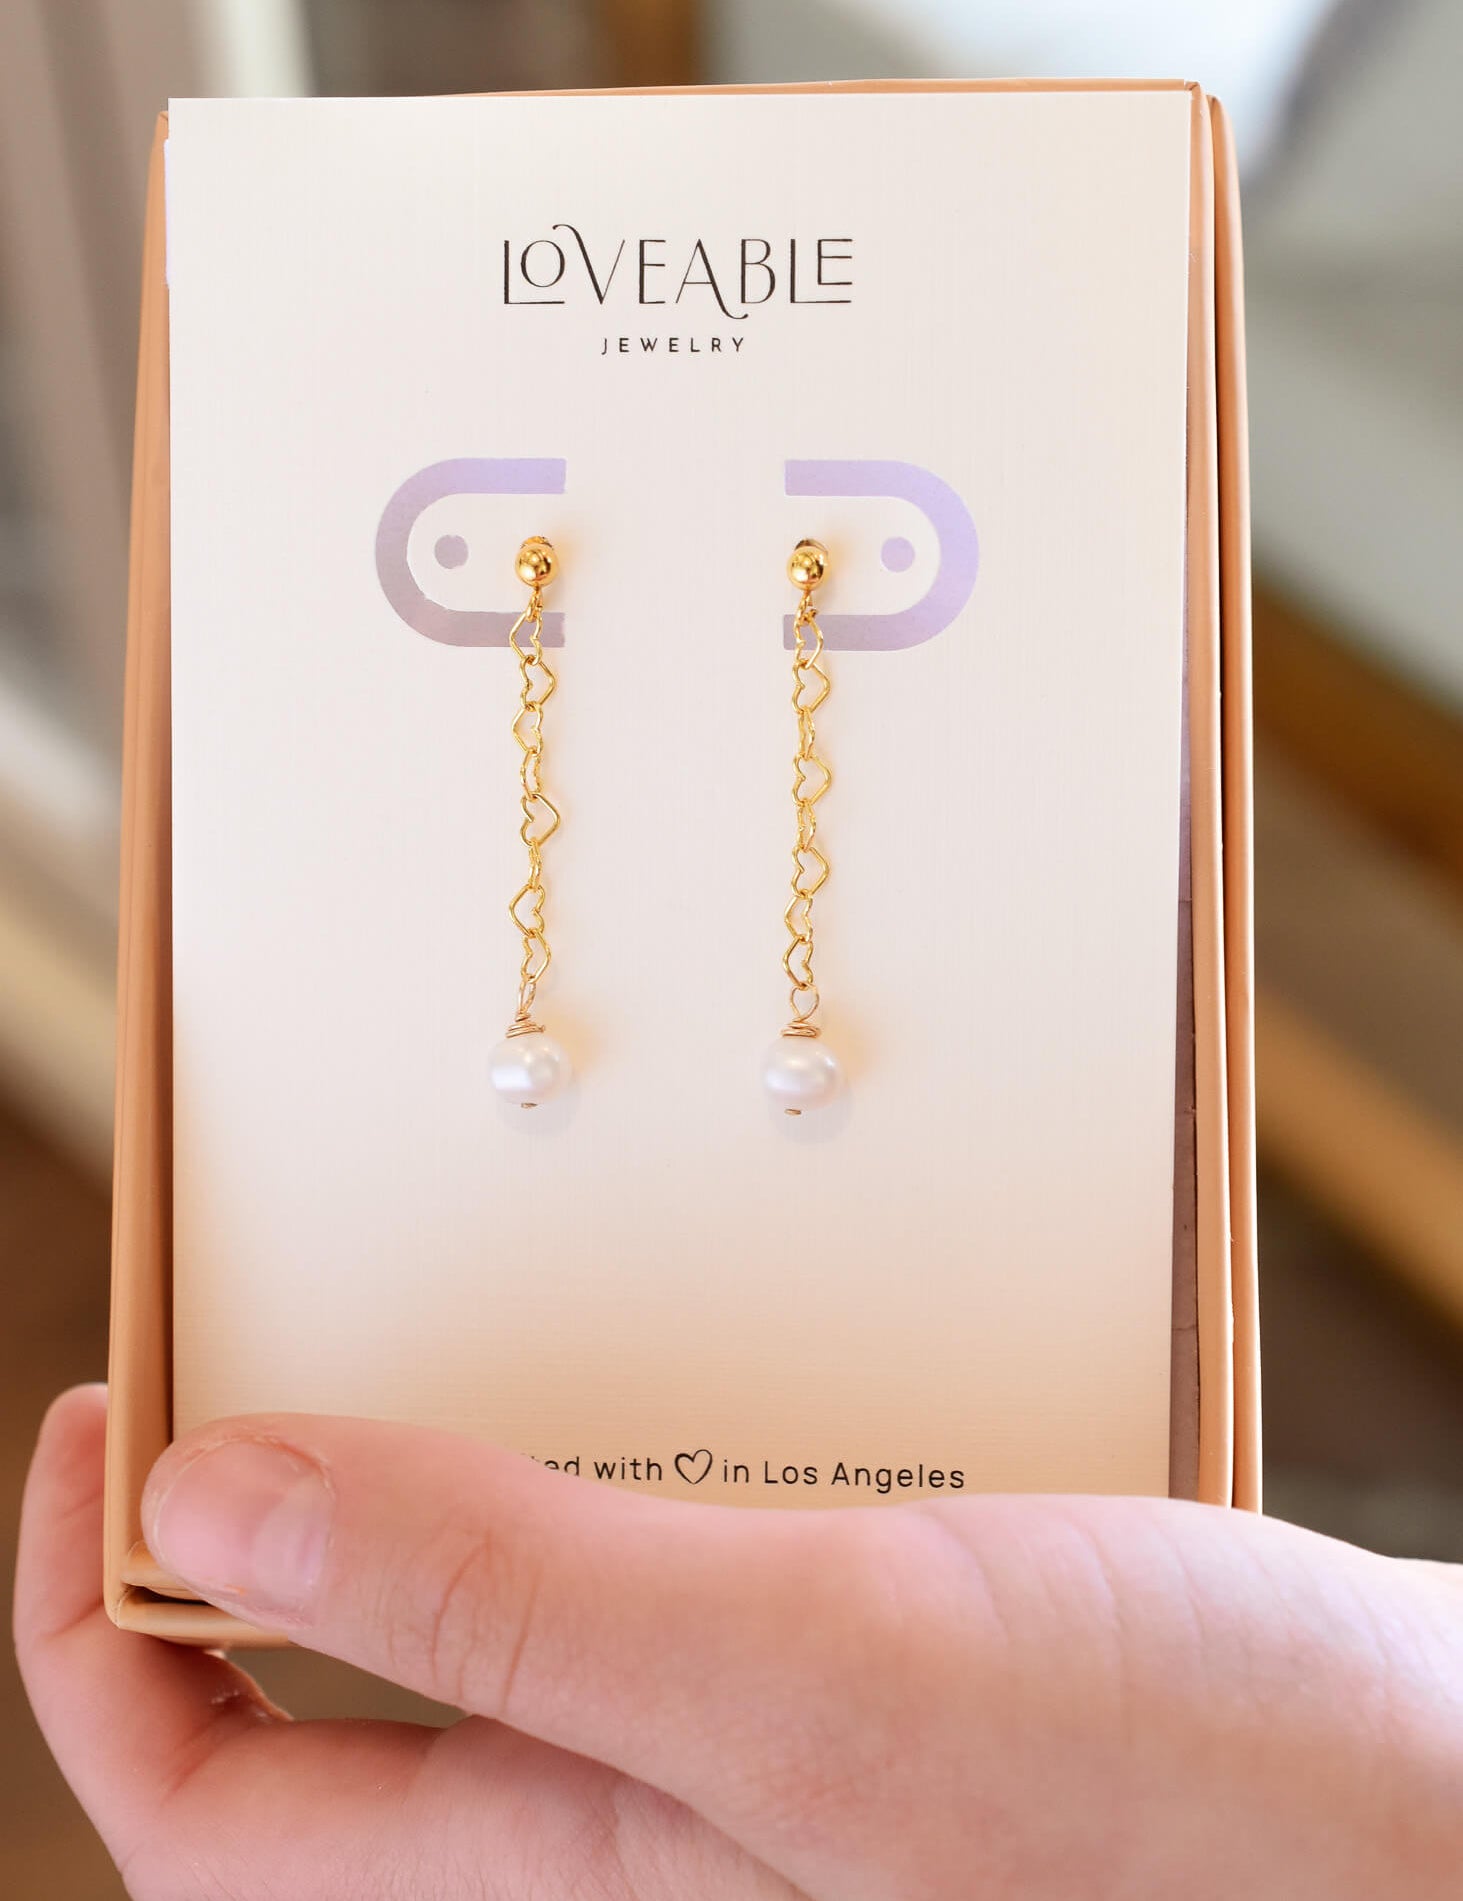 Lover Pearl Drop Earrings